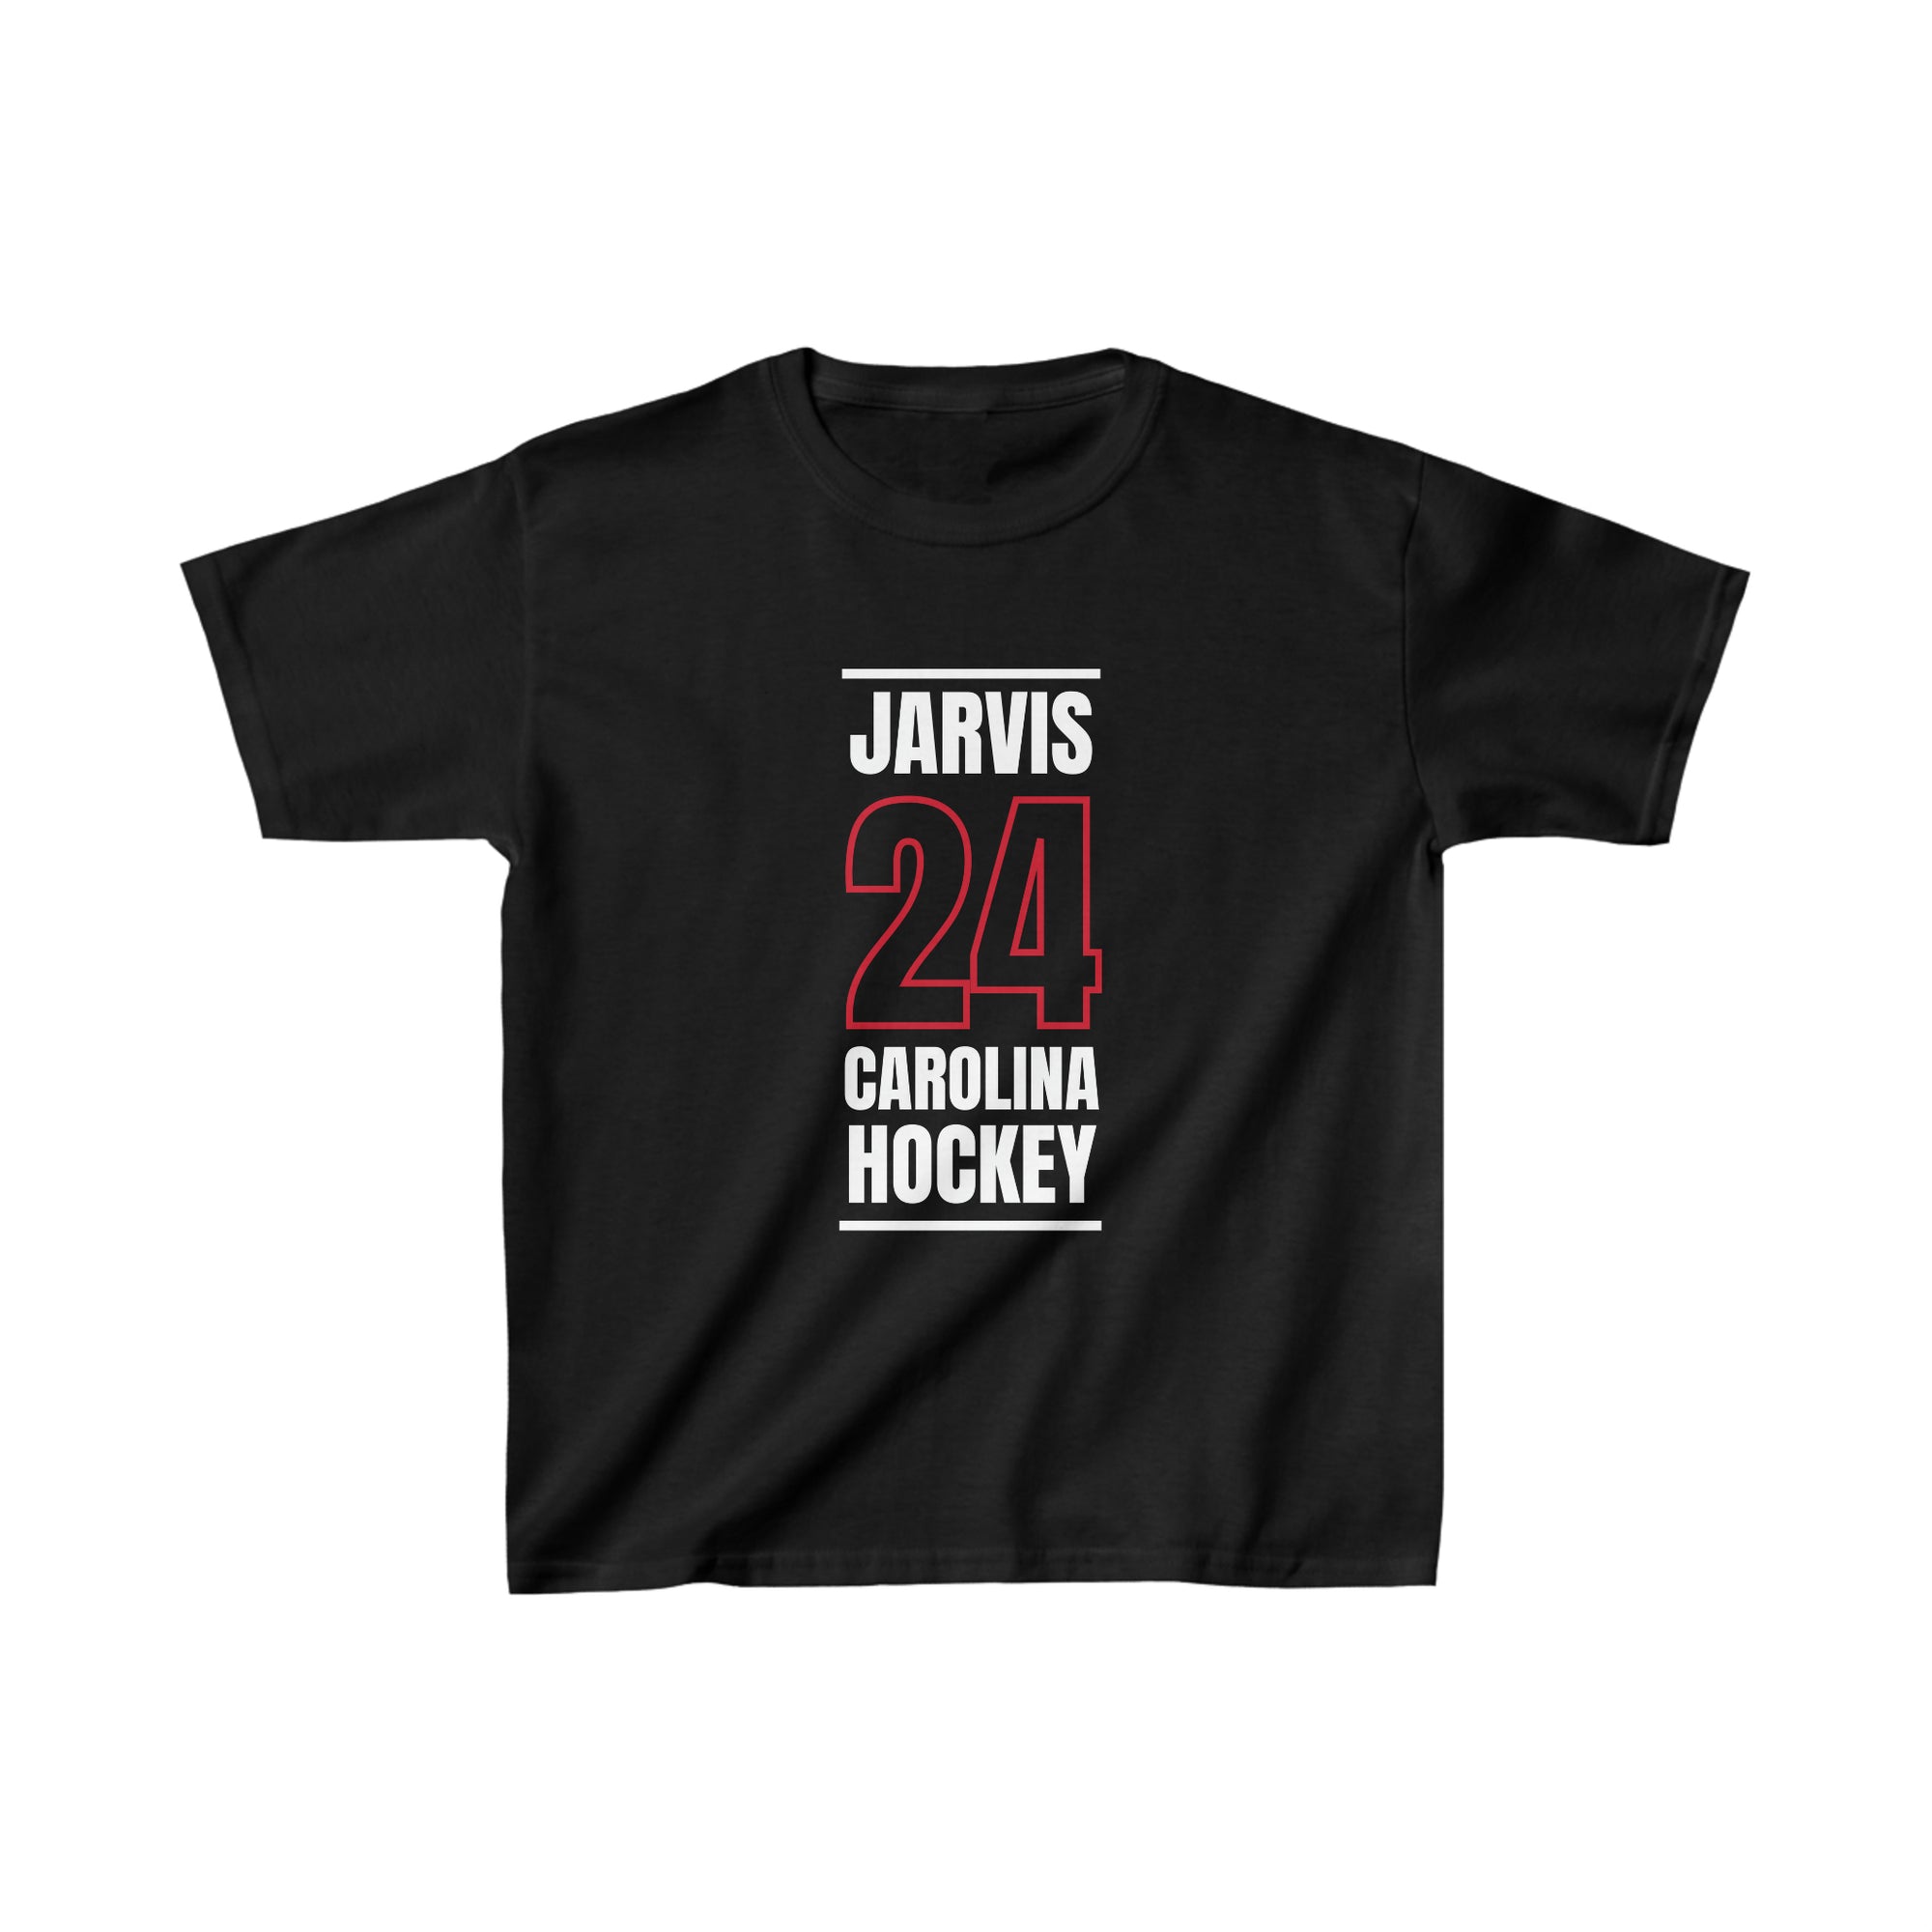 Jarvis 24 Carolina Hockey Black Vertical Design Kids Tee